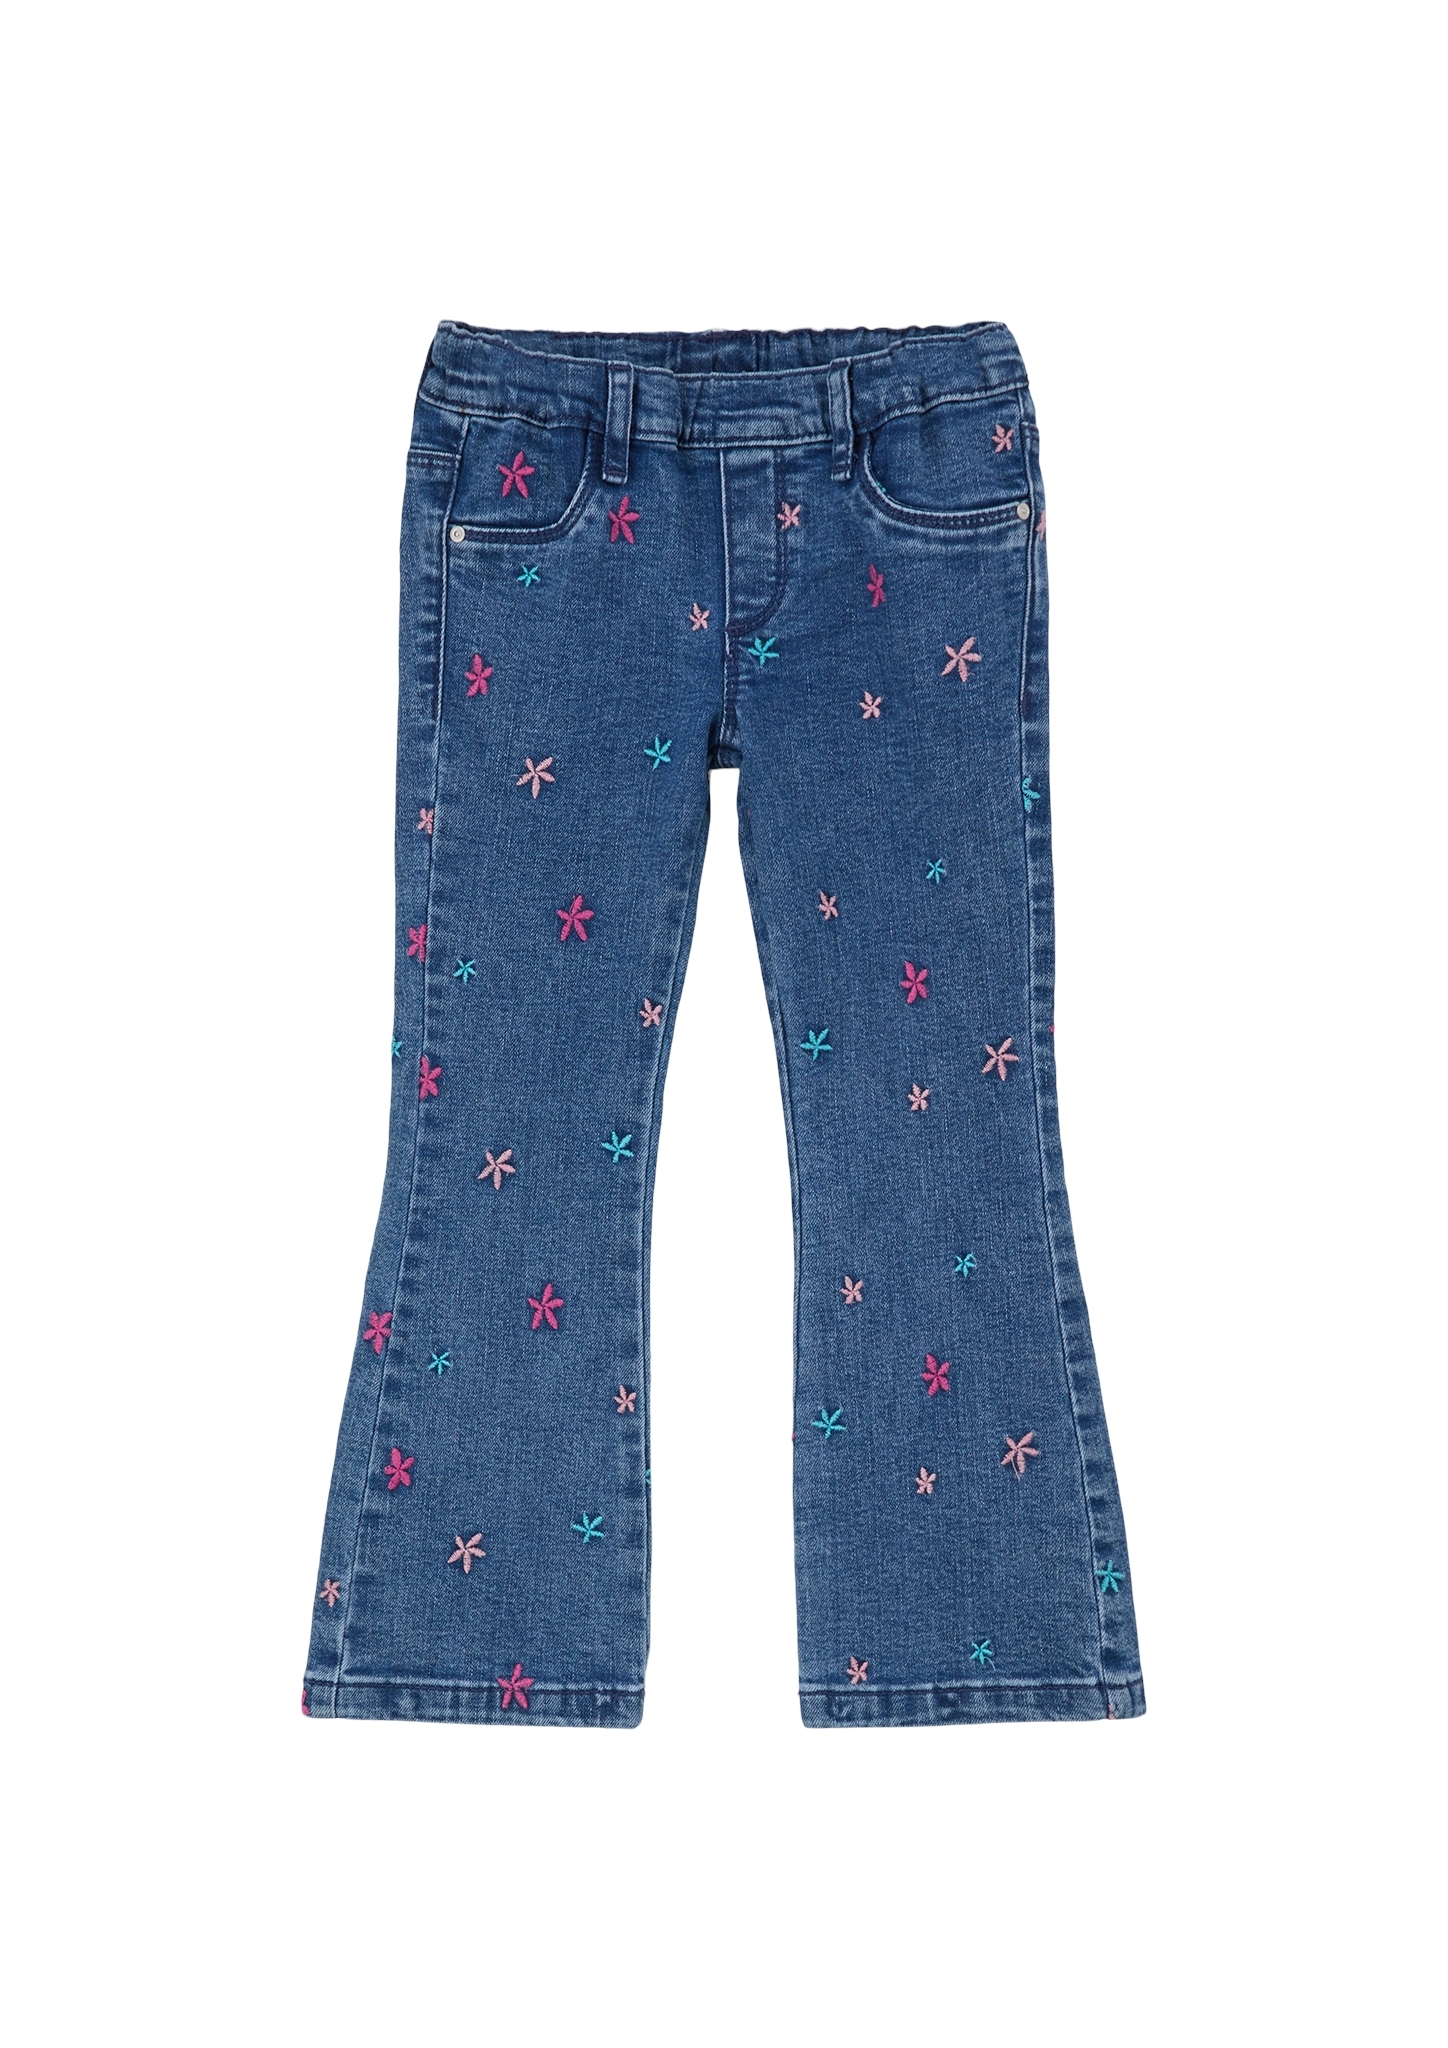 S.OLIVER Jeans Betsy 10724607 kaufen | WÖHRL